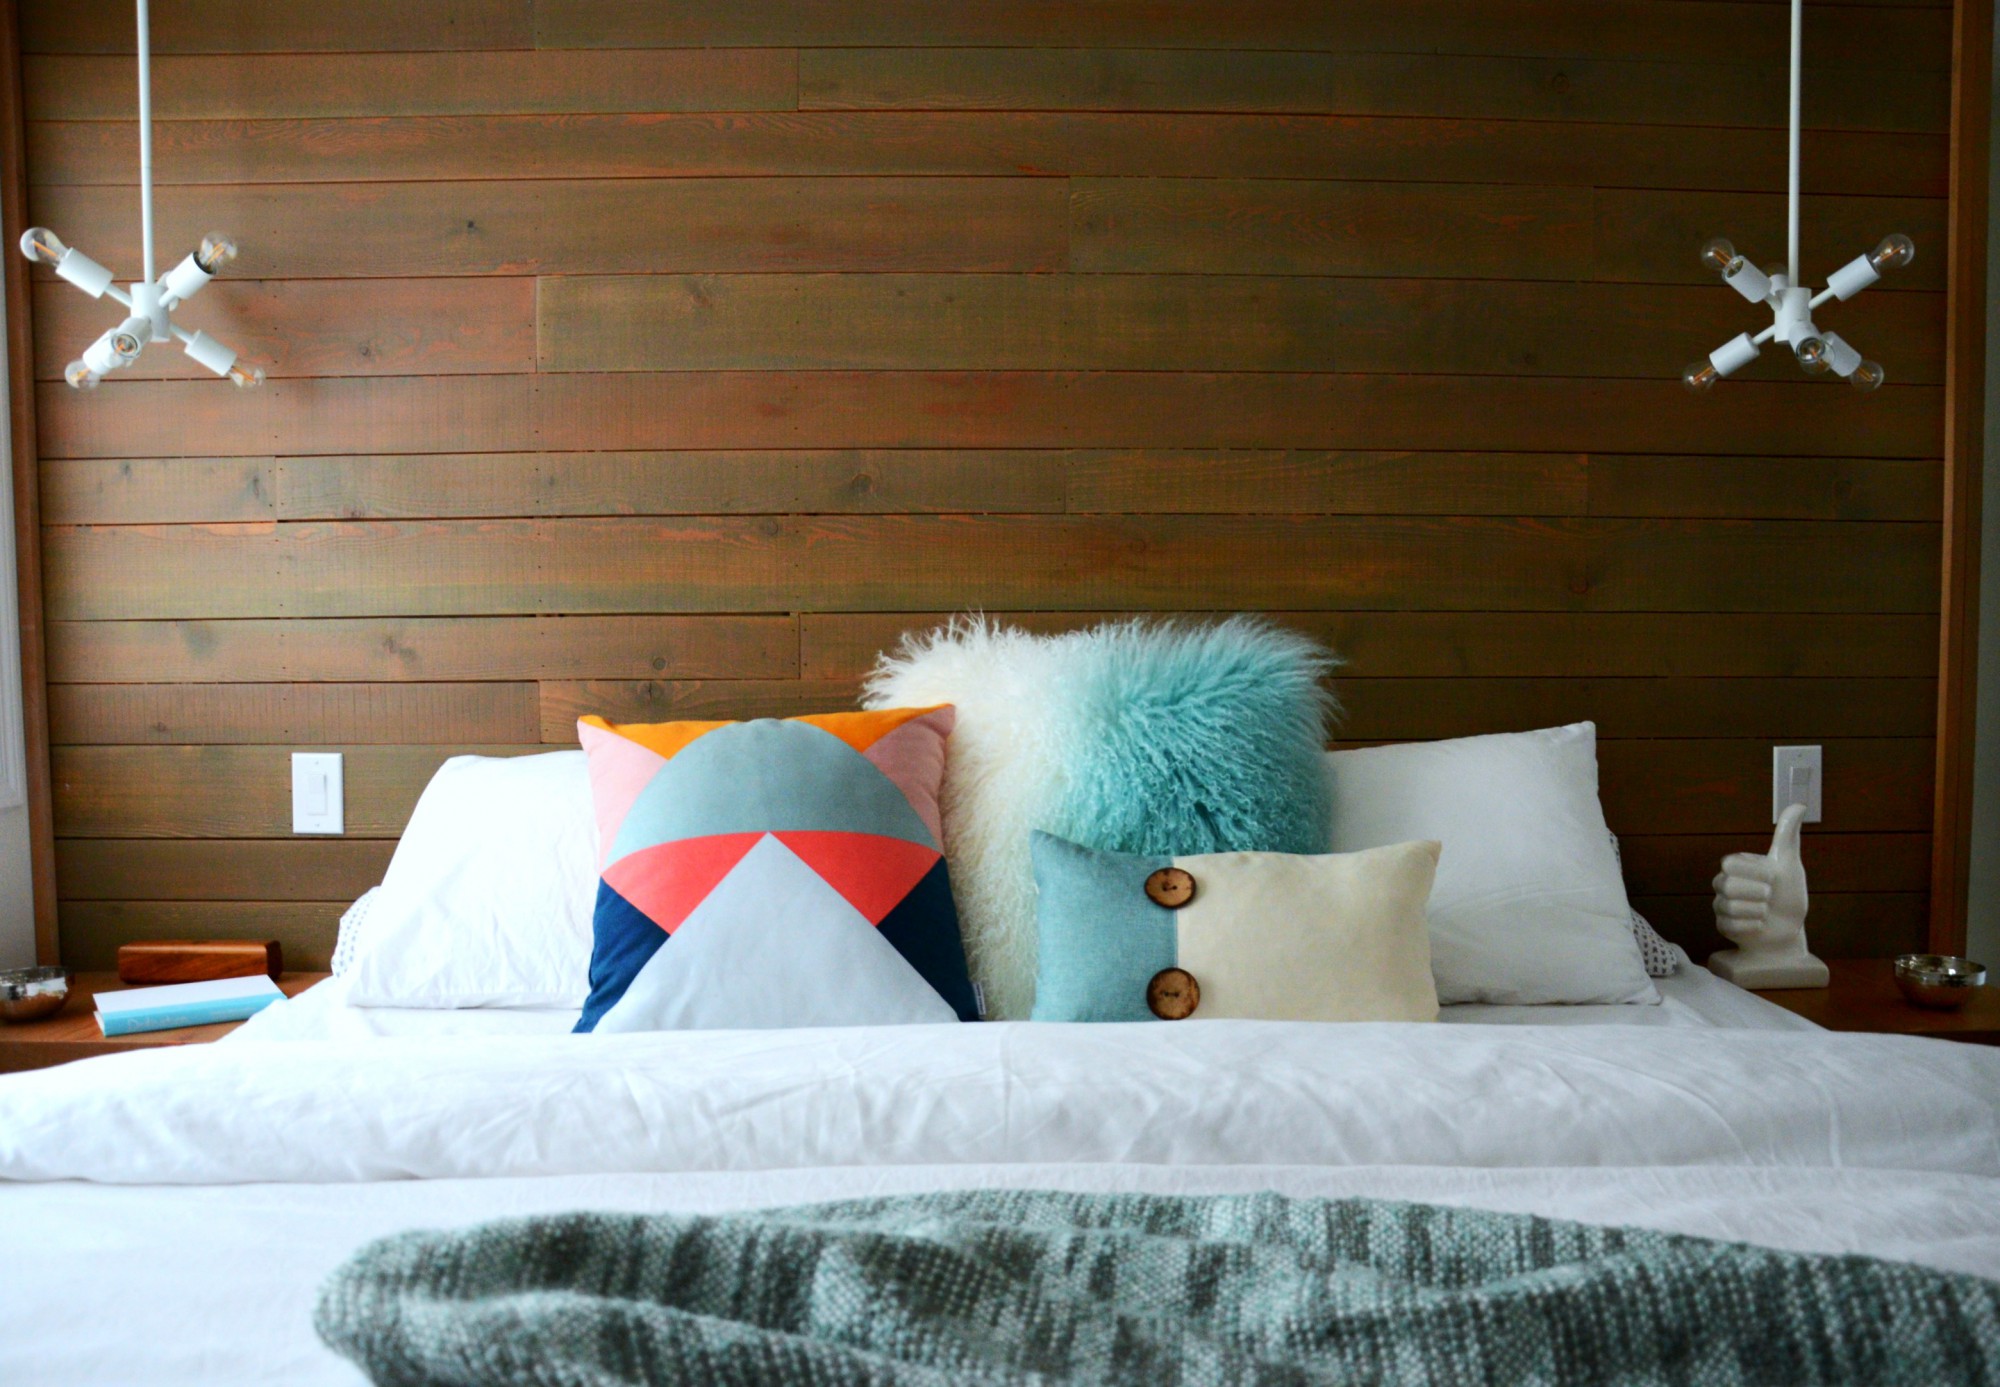 Colourful Master Bedroom and Ensuite | Marlo Creative interiors | Calgary Interior Designer